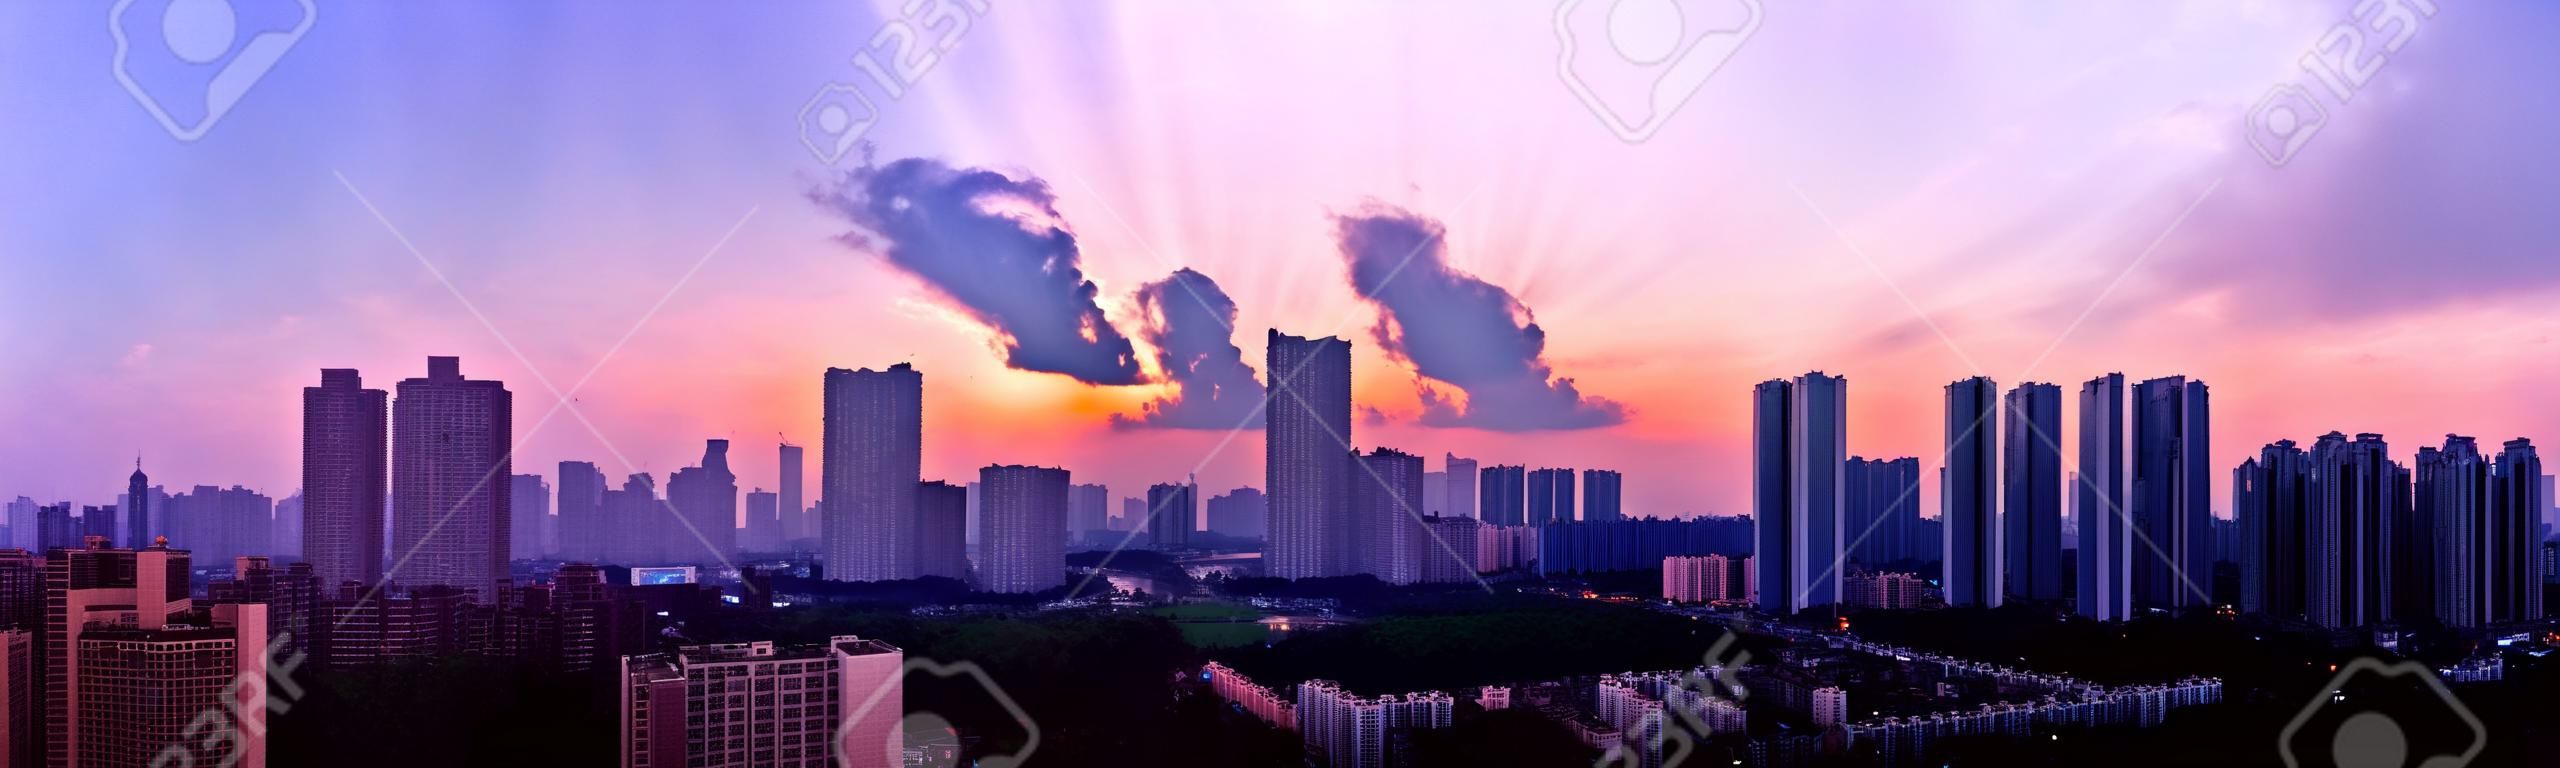 Guangzhou twilight panorama image